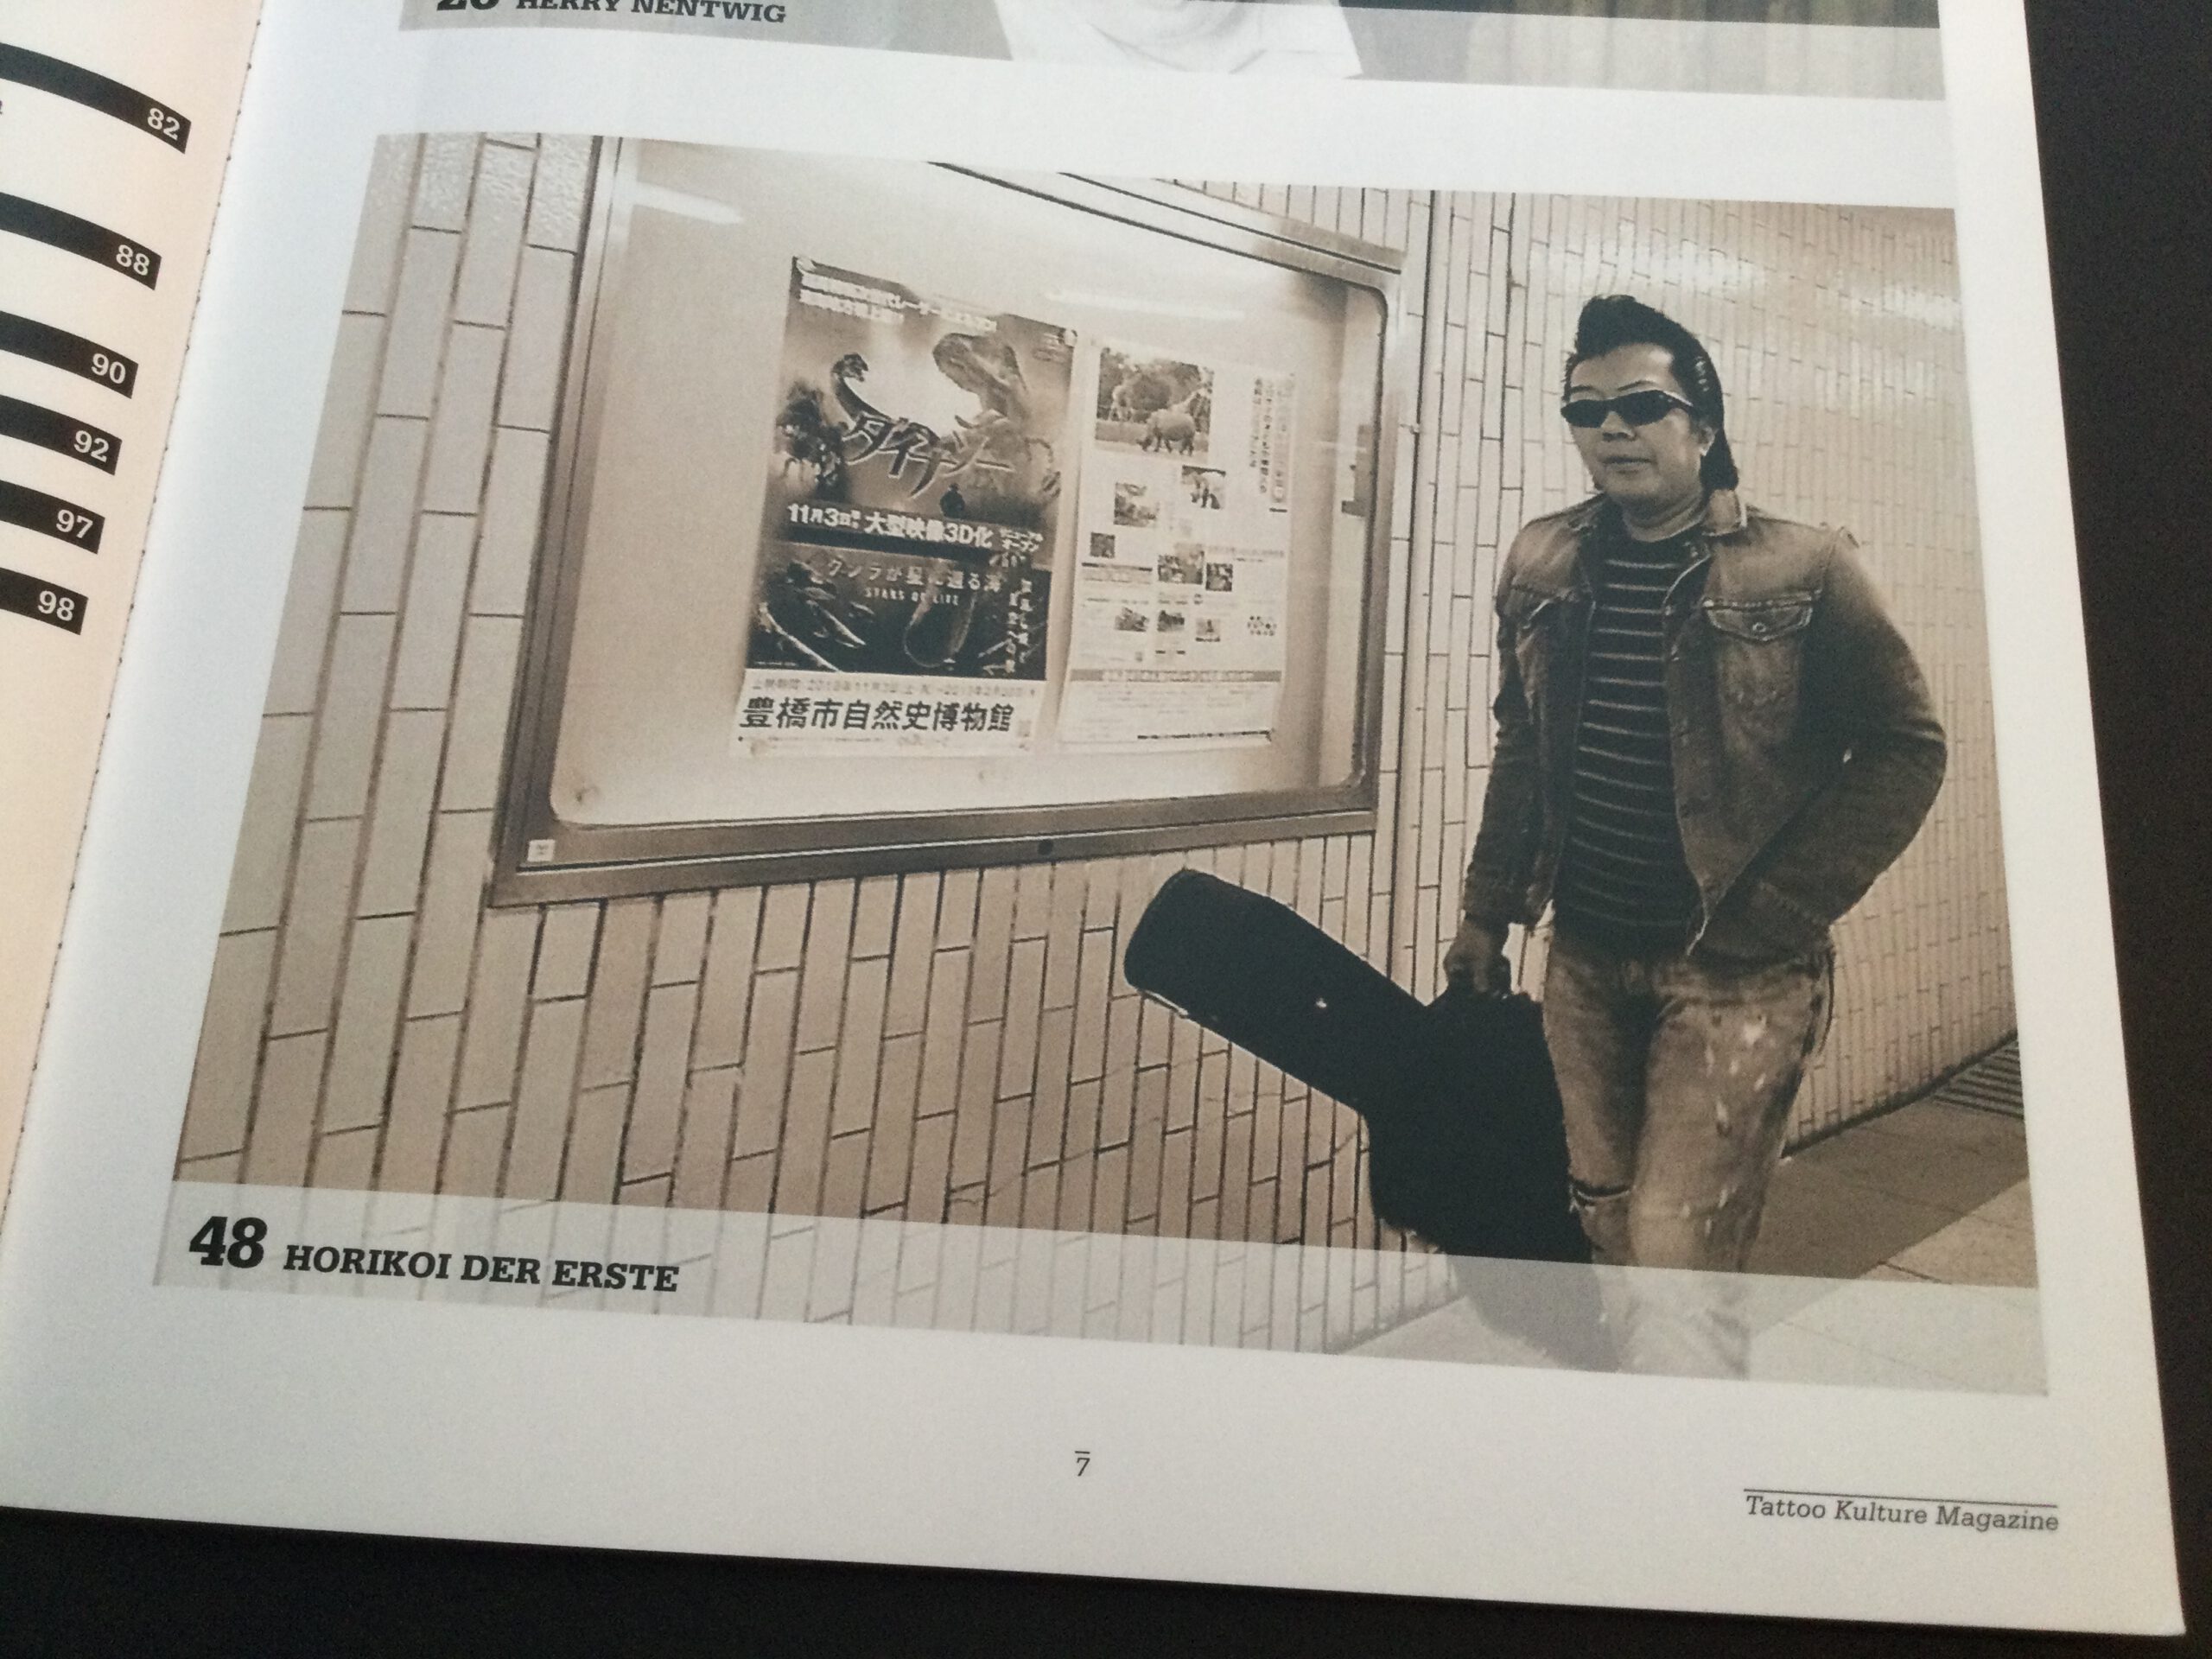 Man with guitar case in Nagoya subway